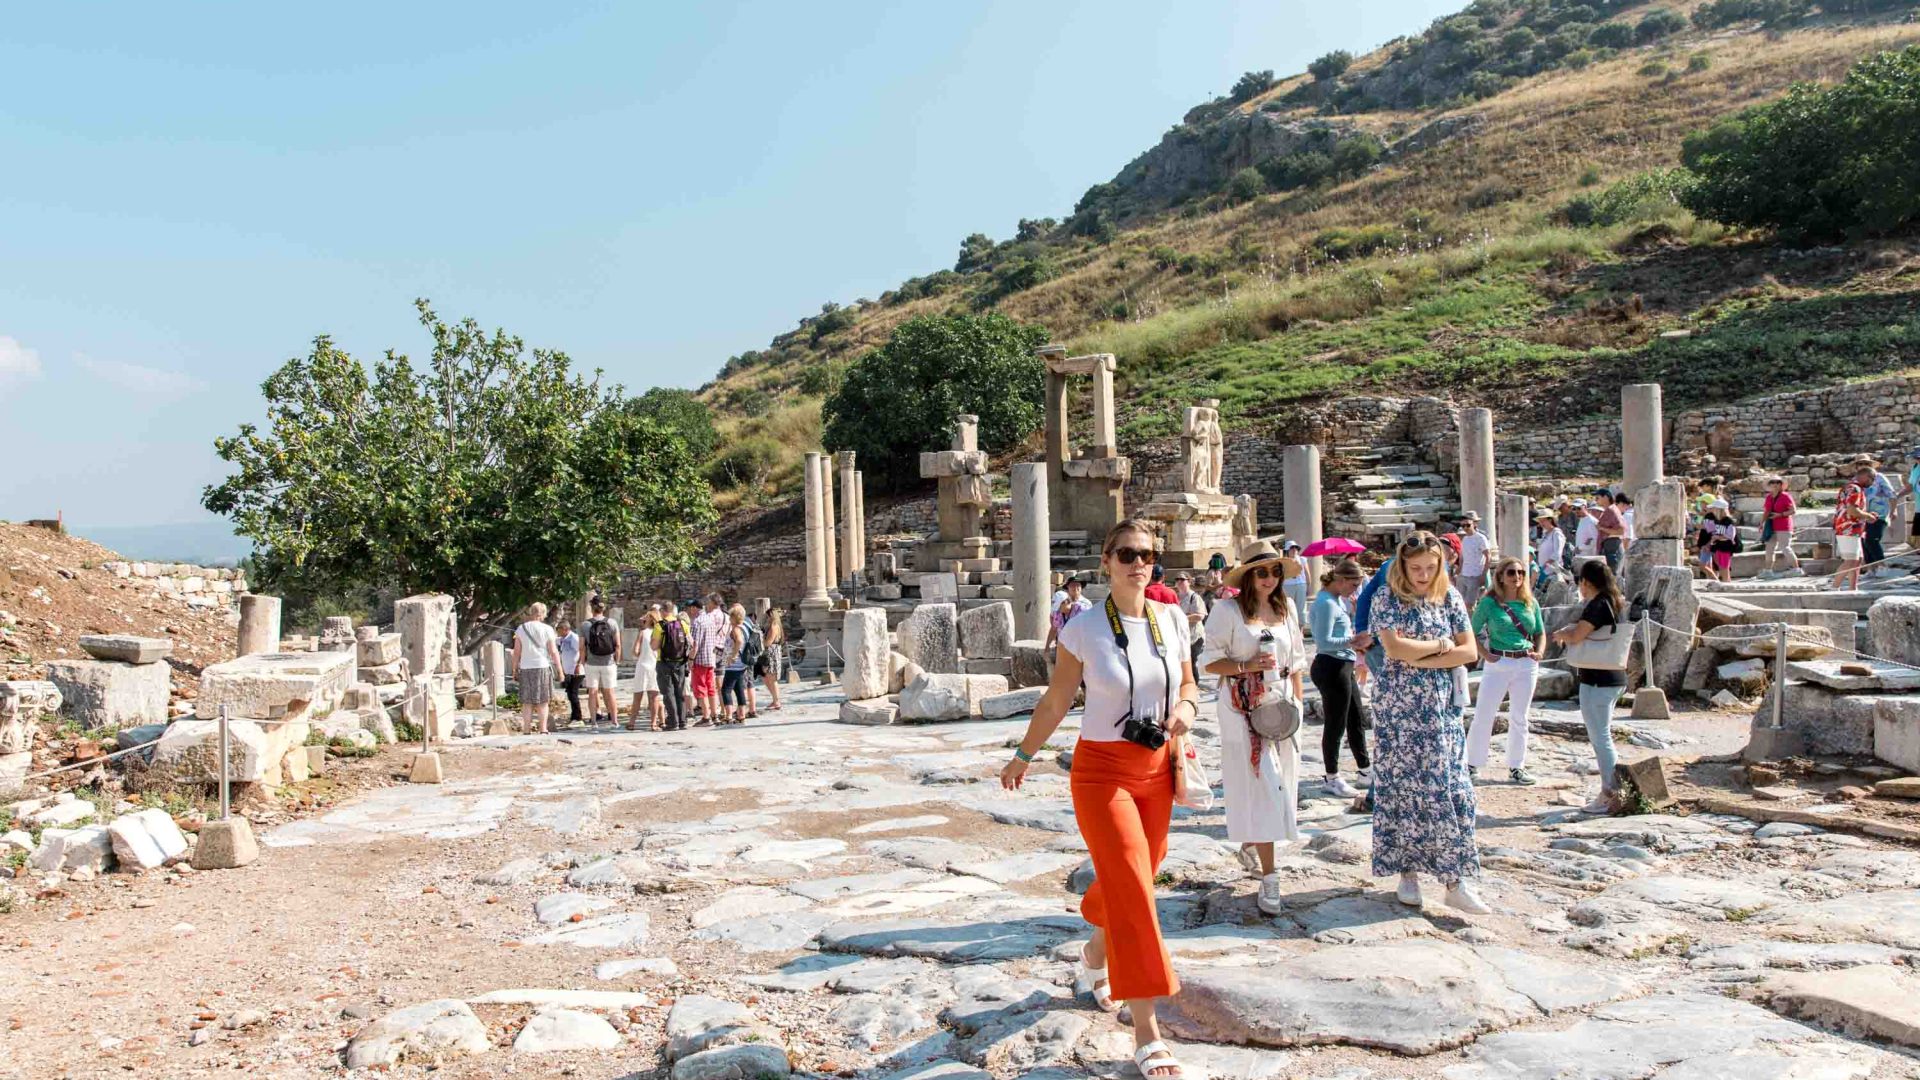 The group of travelers walks amongst the ruins of Ephesus in Selcuk.